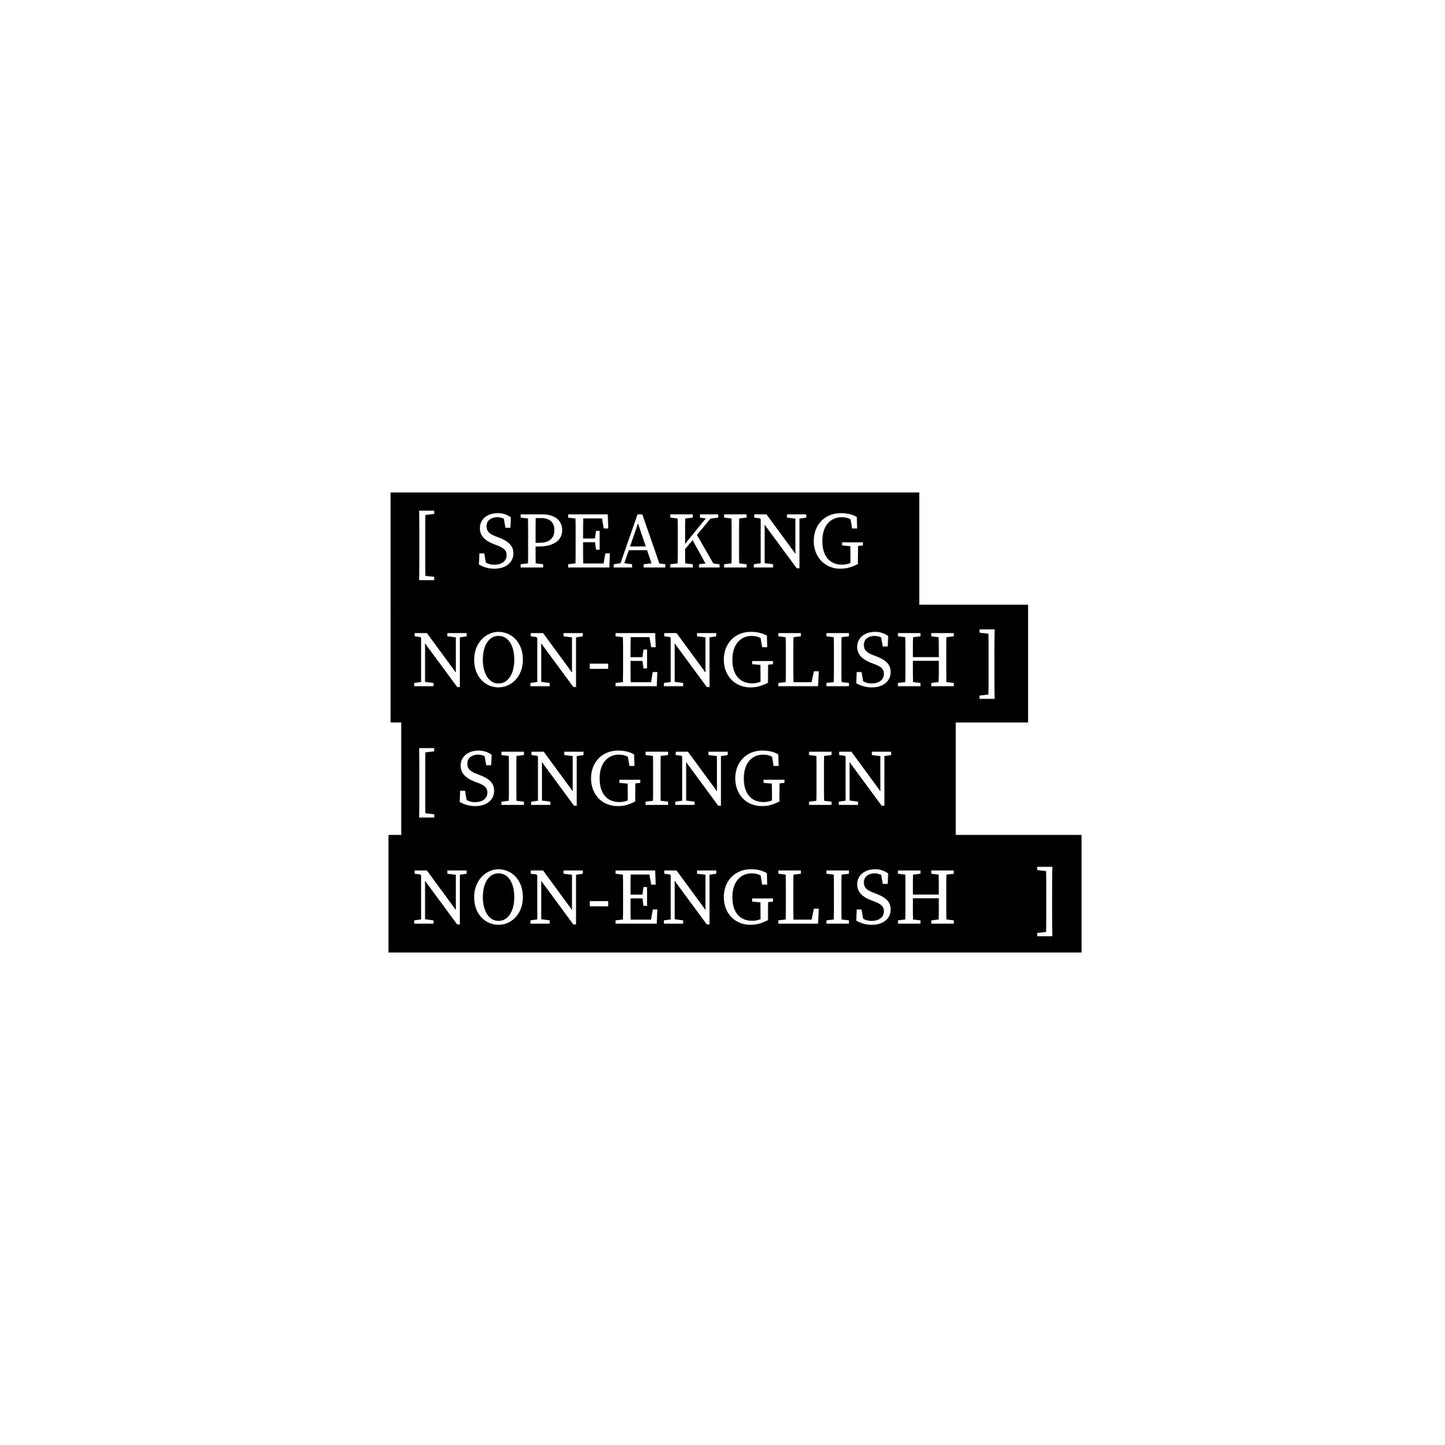 Hablar no inglés